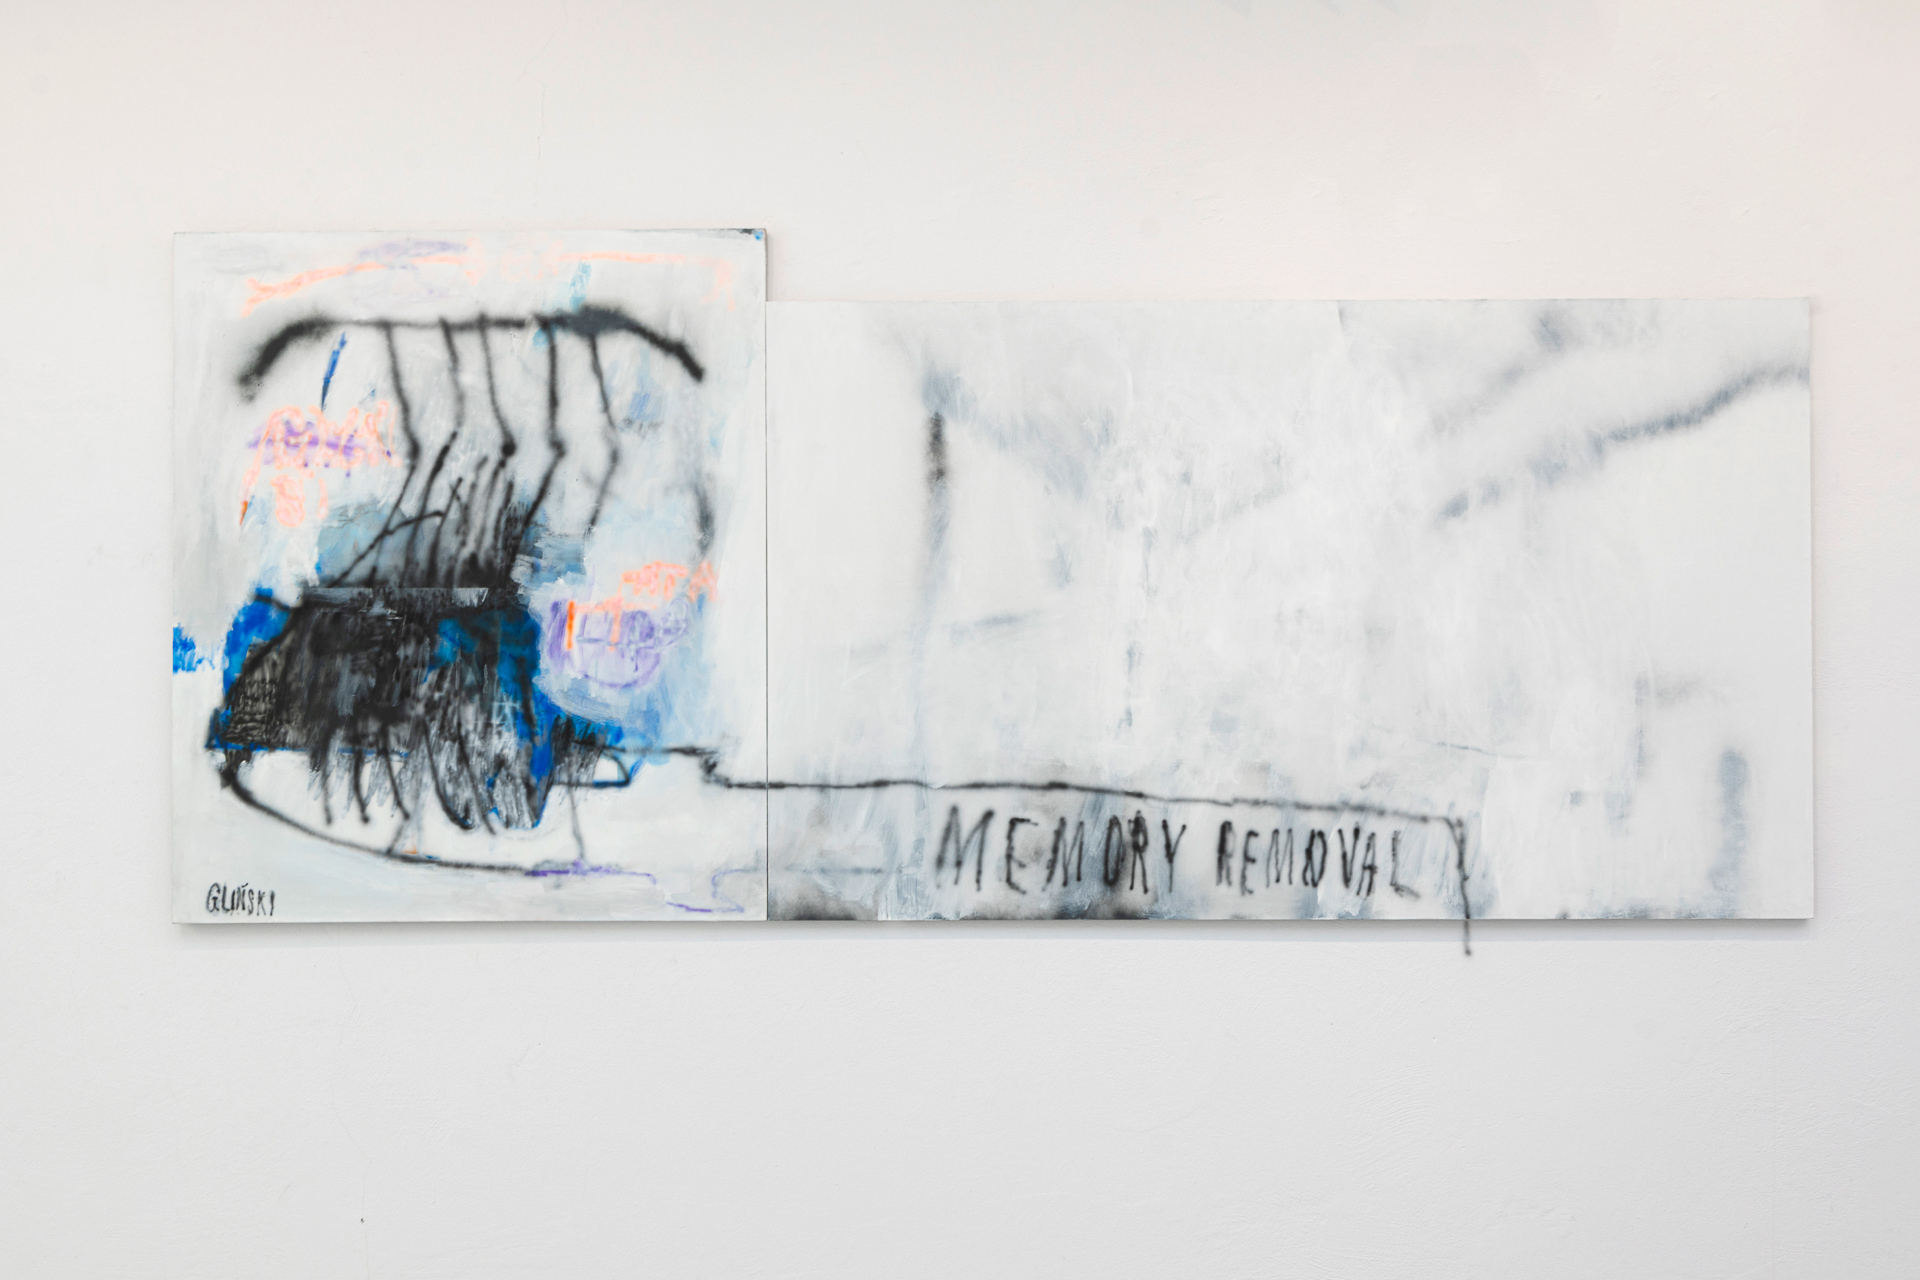 Jakub Glinski - Memory Removal 004, 2022, acrylic on canvas, 320 x 140 cm